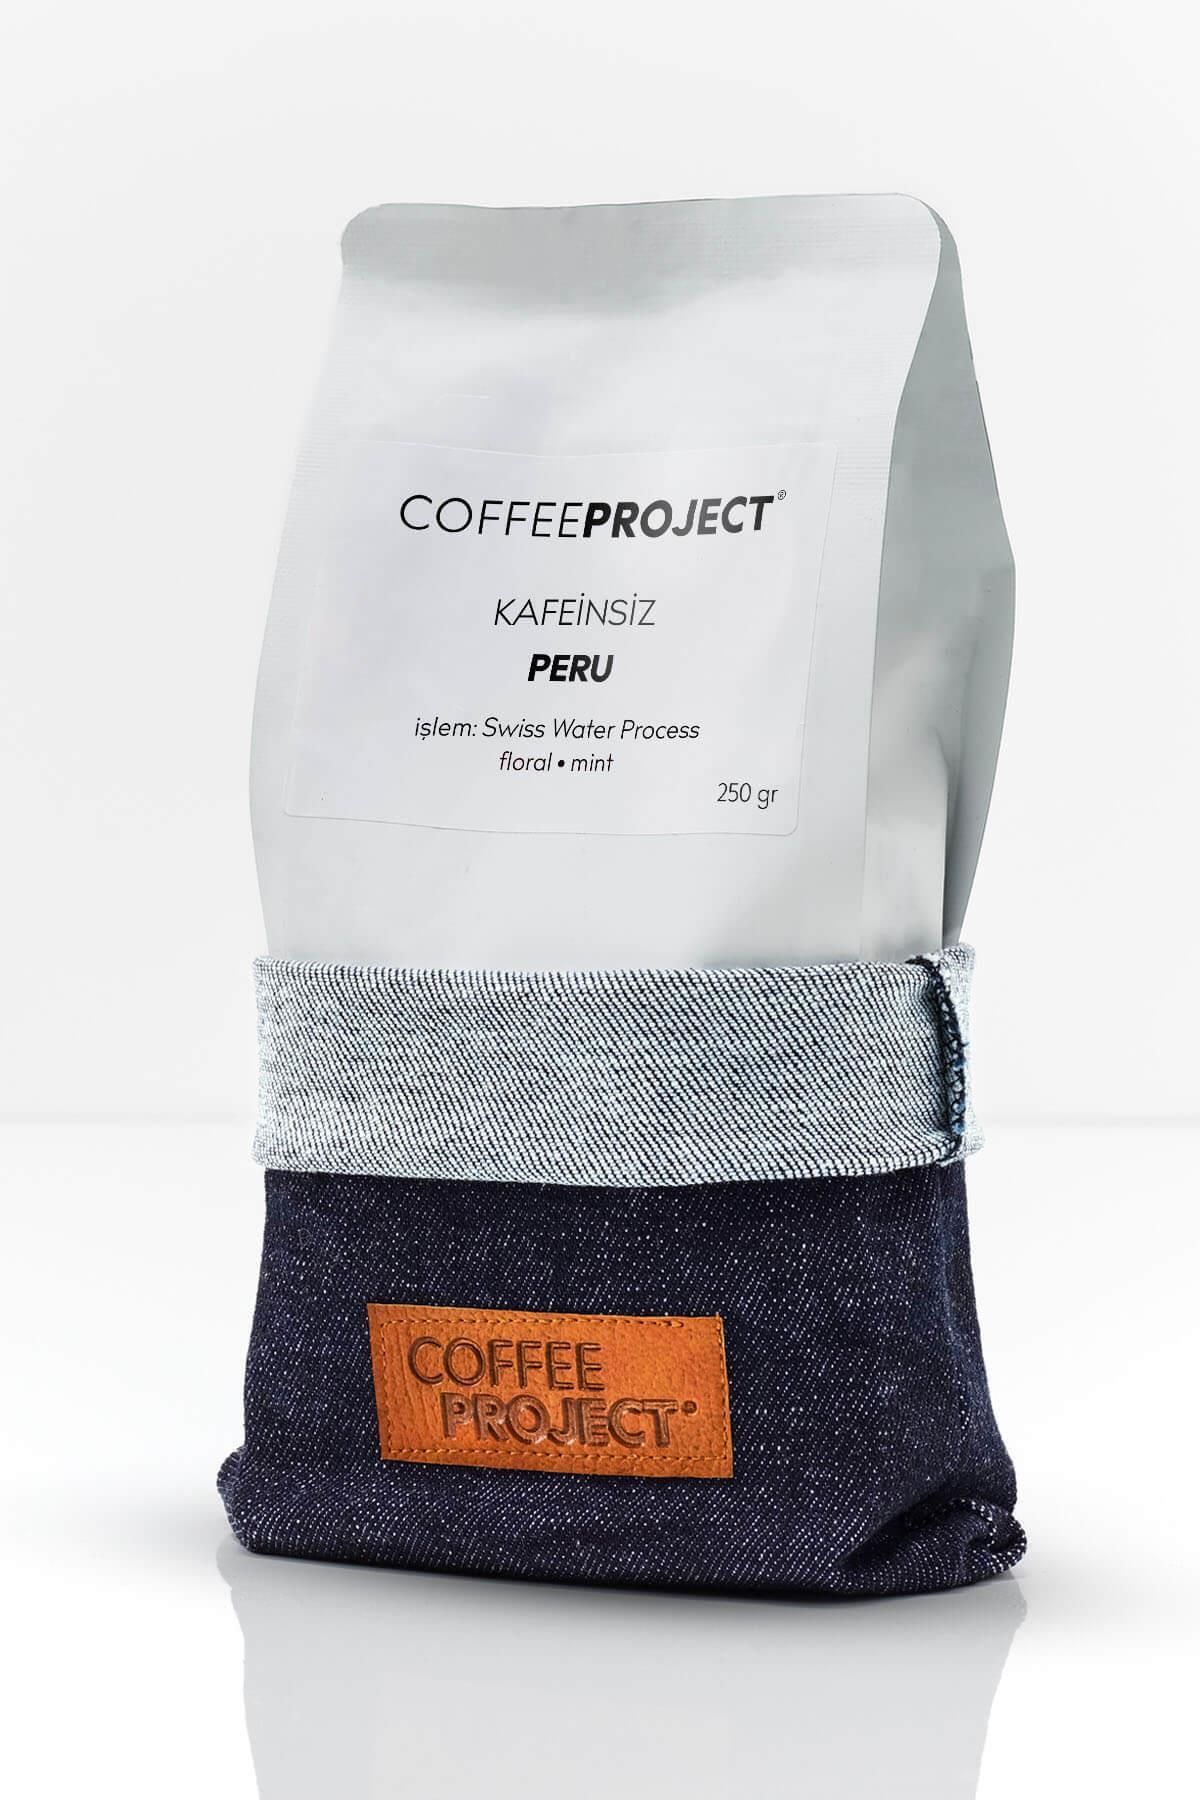 Coffee Project Peru - Kafeinsiz Kahve | Decaf Coffee 250 gr